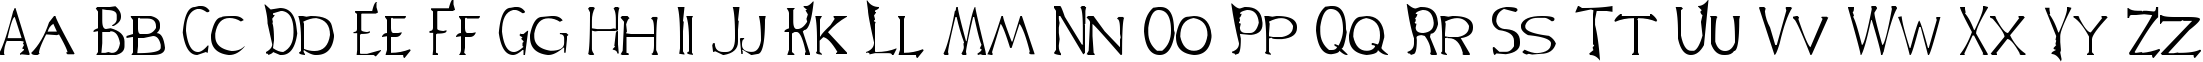 Пример написания английского алфавита шрифтом Lineage 2 Font